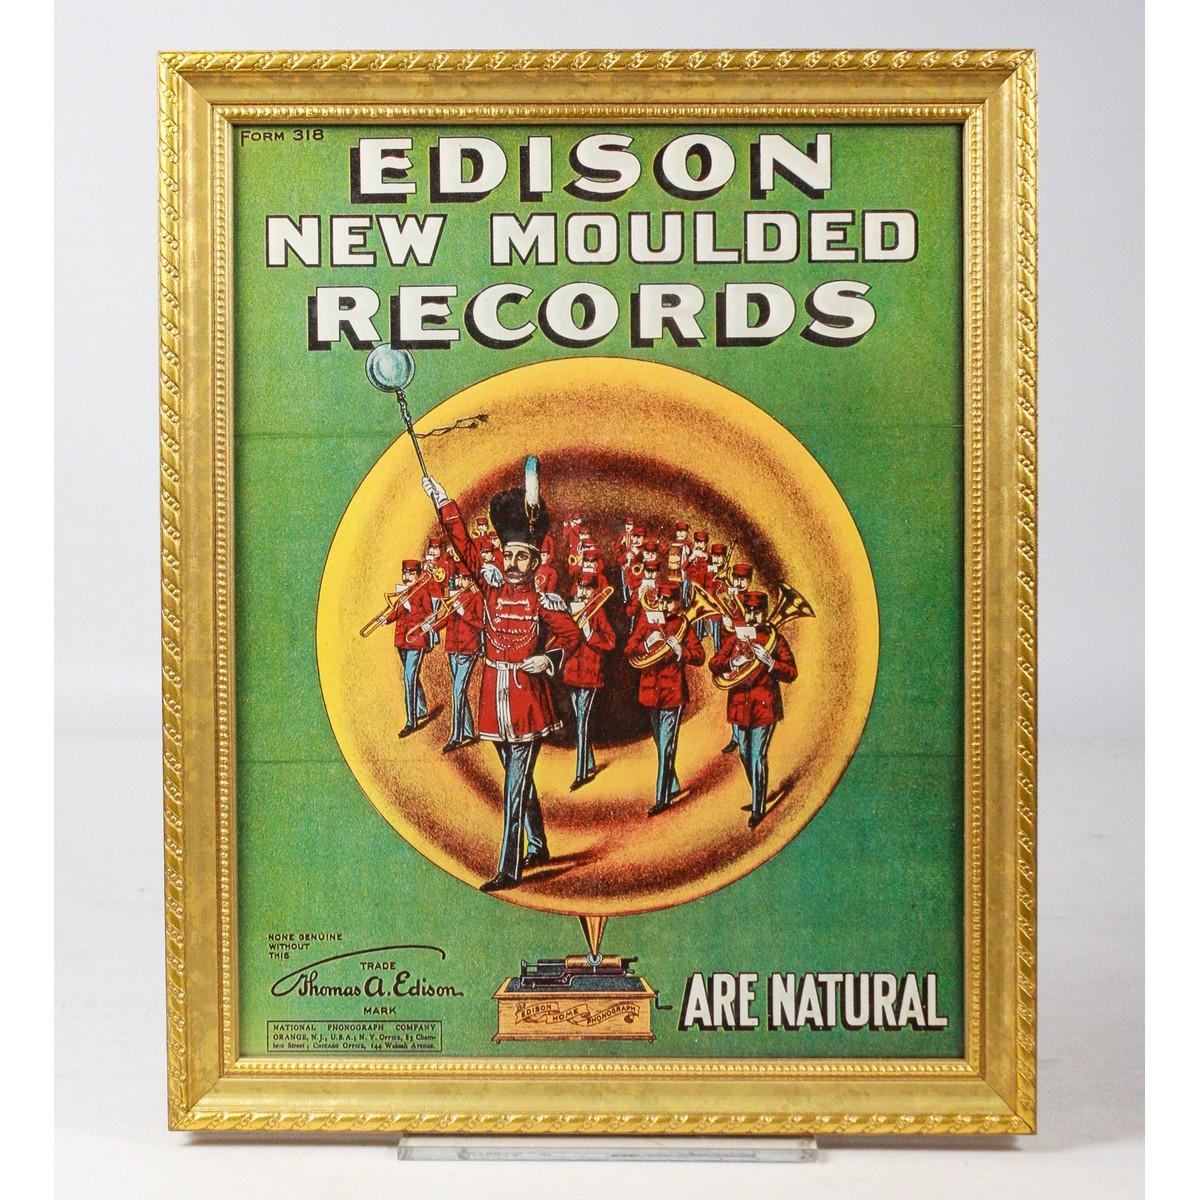 4 Framed Edison Phonograph Advertisement Prints